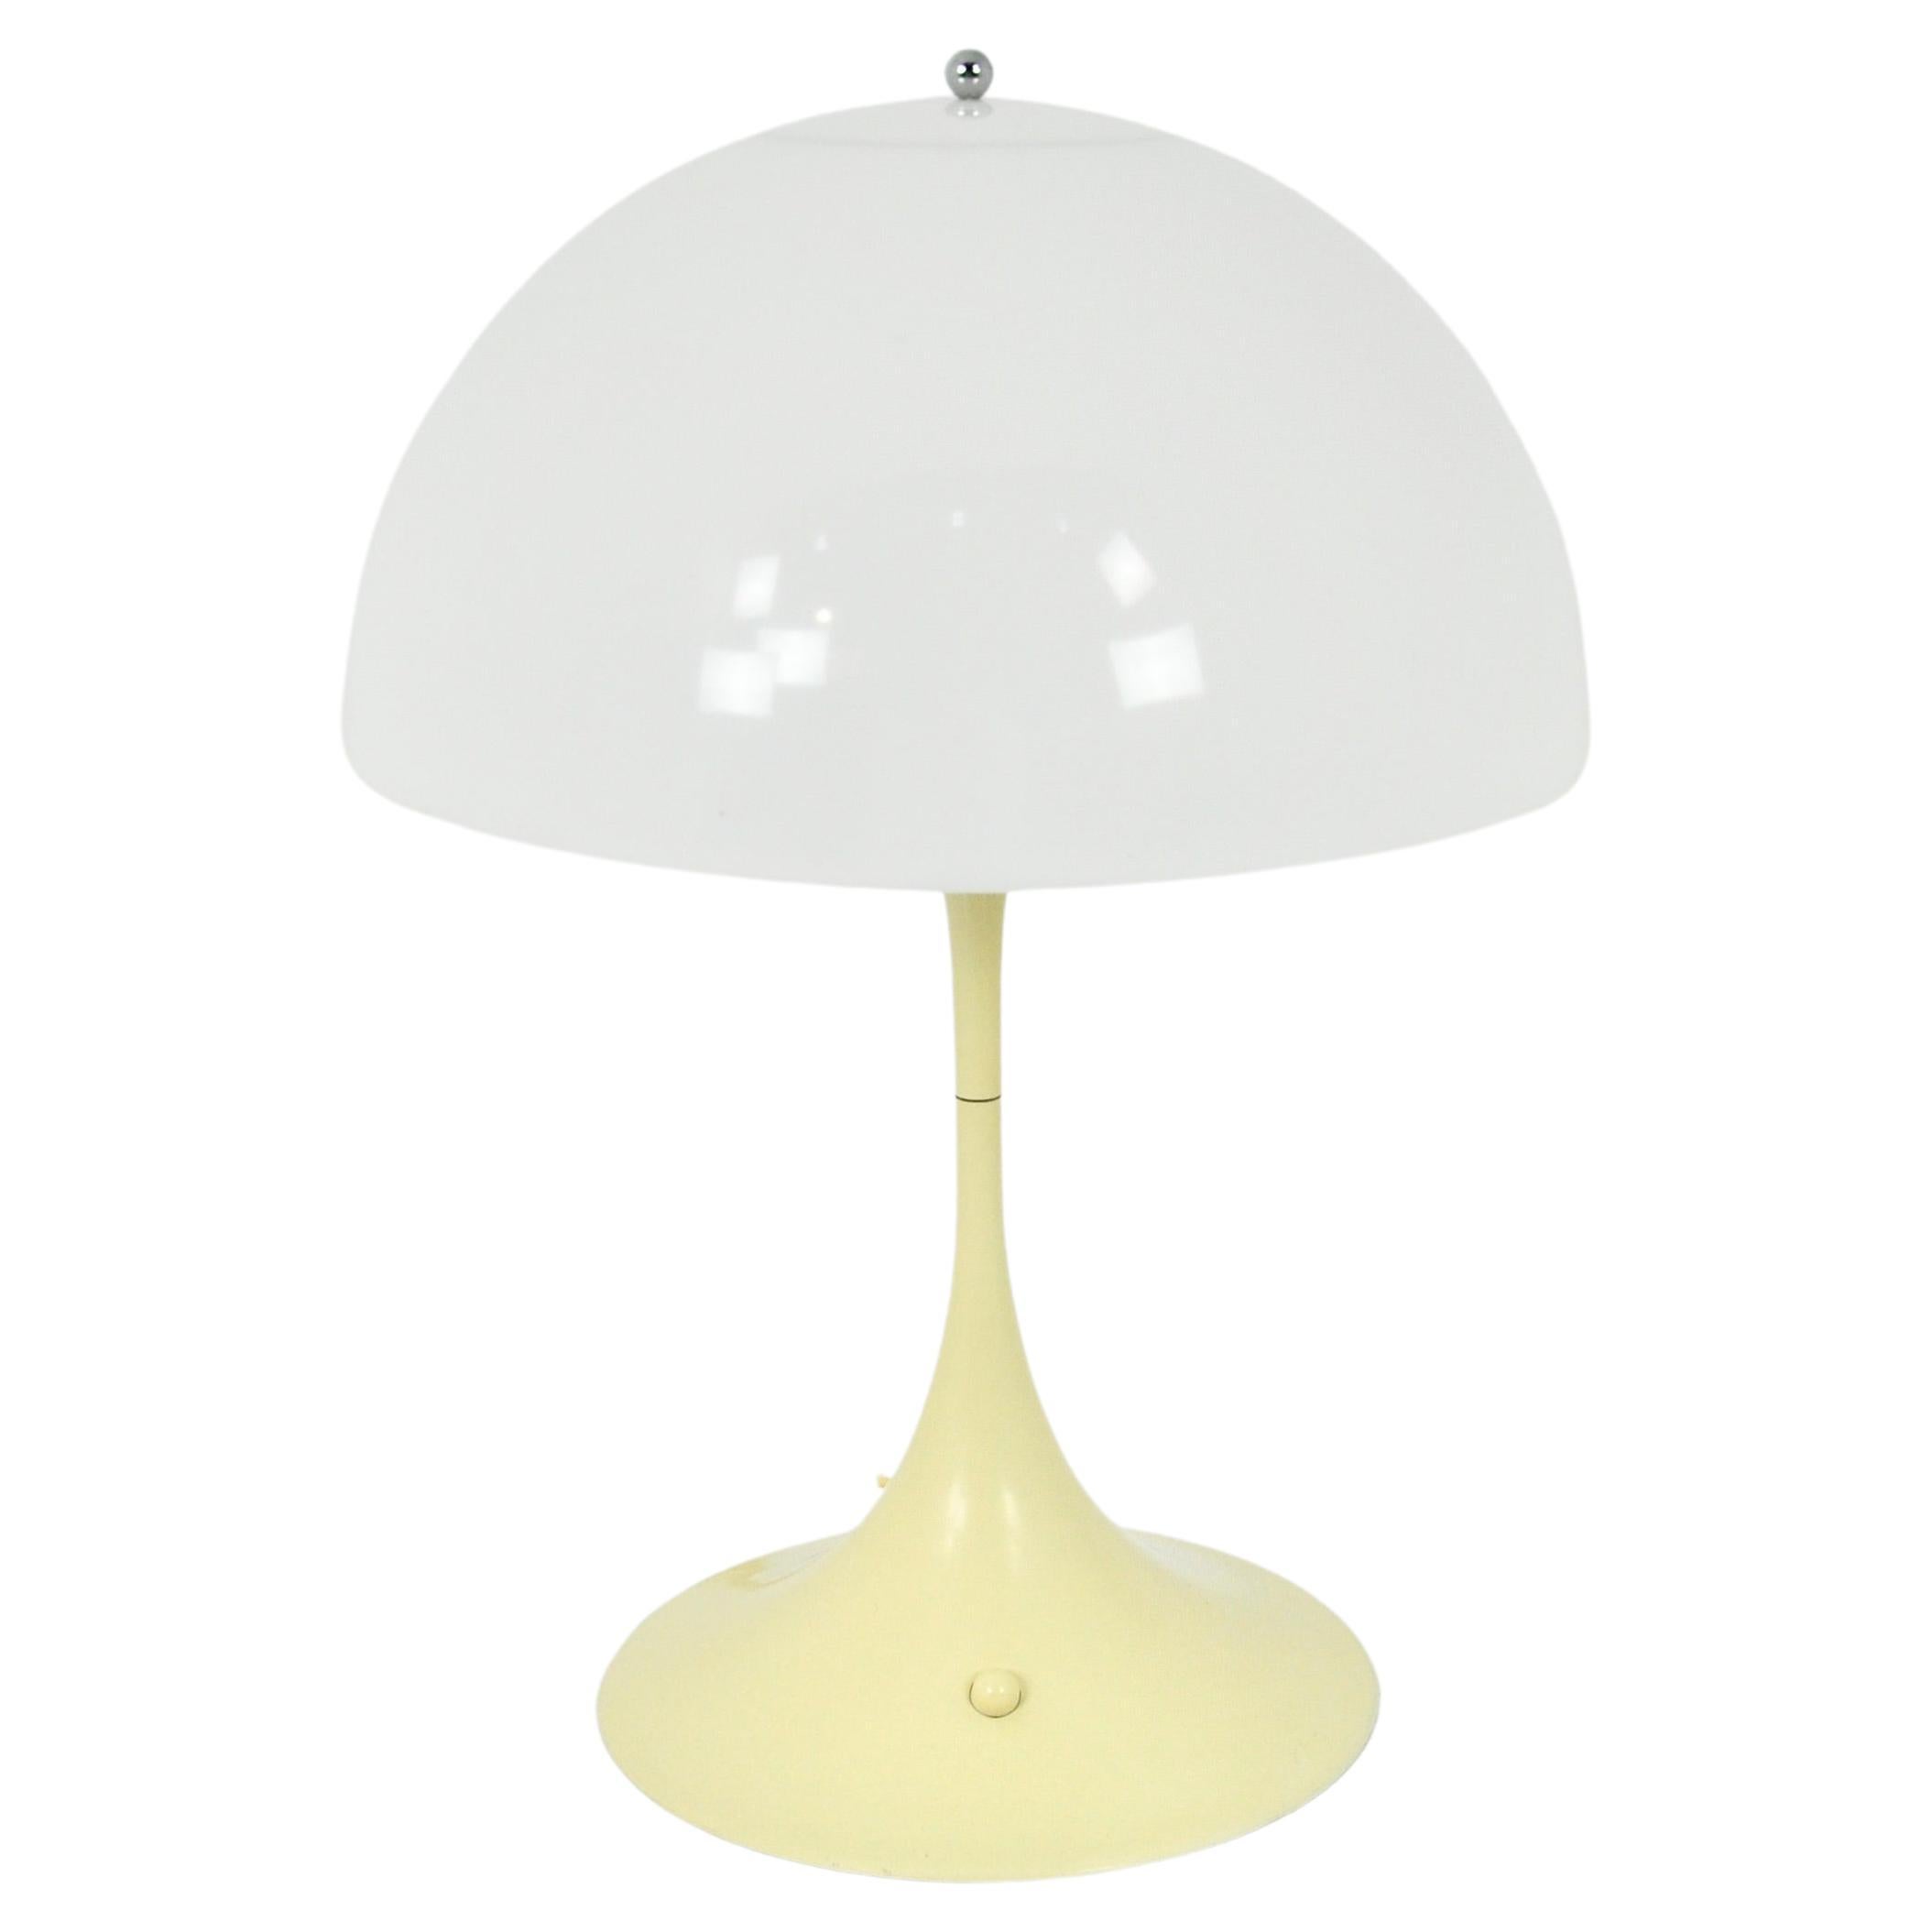 Verner Panton for Louis Poulsen "Panthella" Table Lamp For Sale at 1stDibs